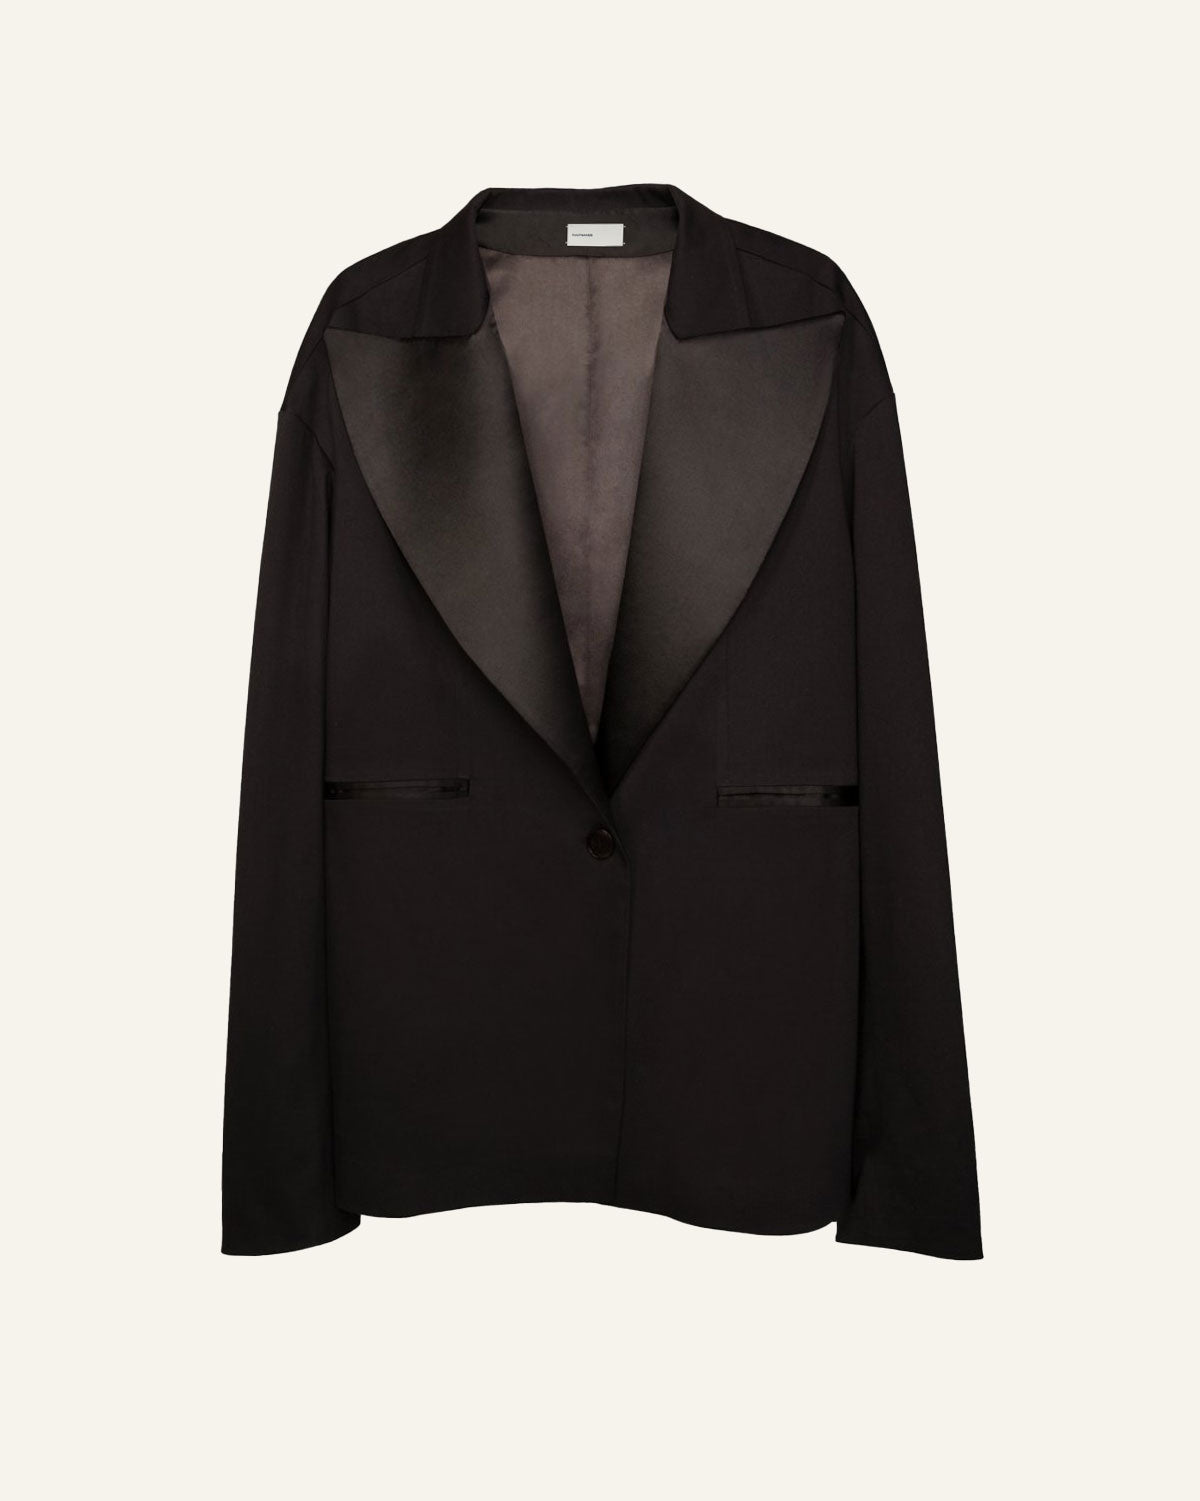 Product photo of a black oversized blazer